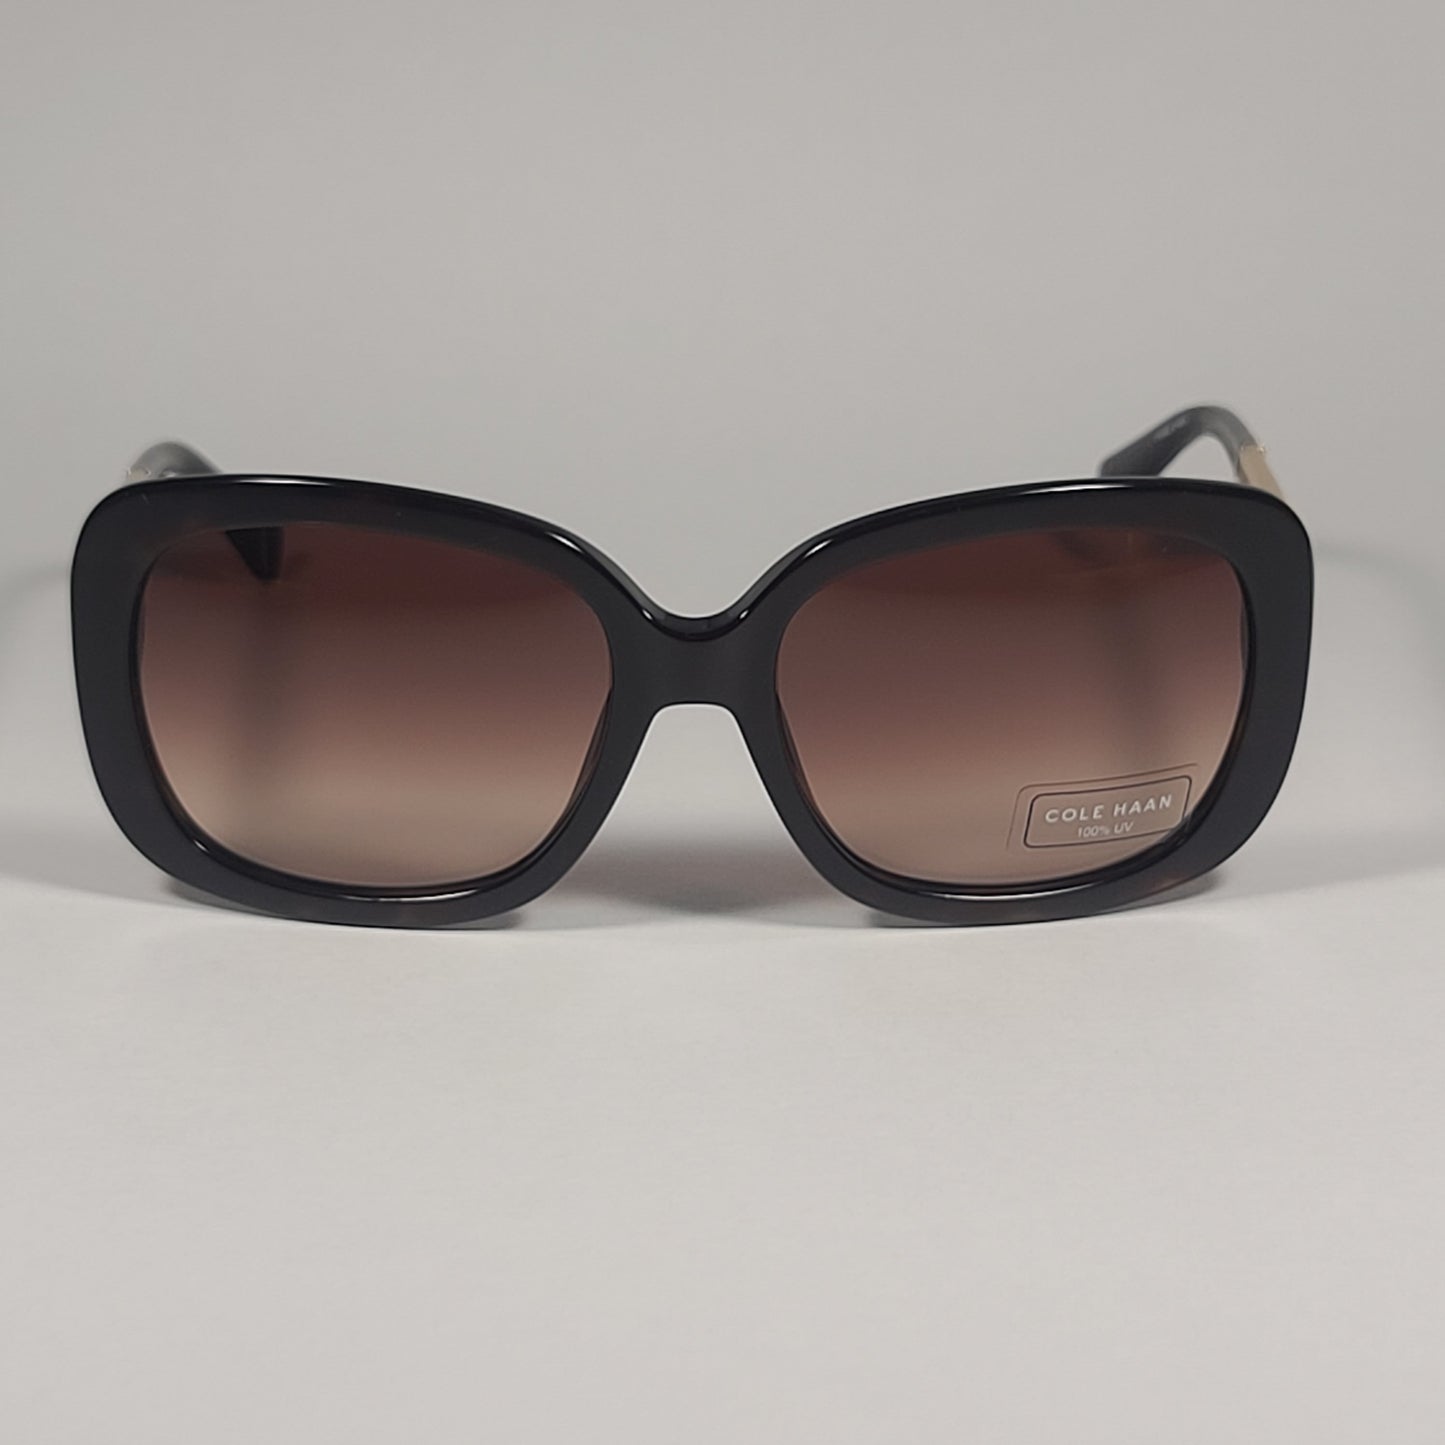 Cole Haan CH7003 237 DARK TORTOISE Oval Sunglasses Dark Tortoise Frame Brown Gradient Lens - Sunglasses